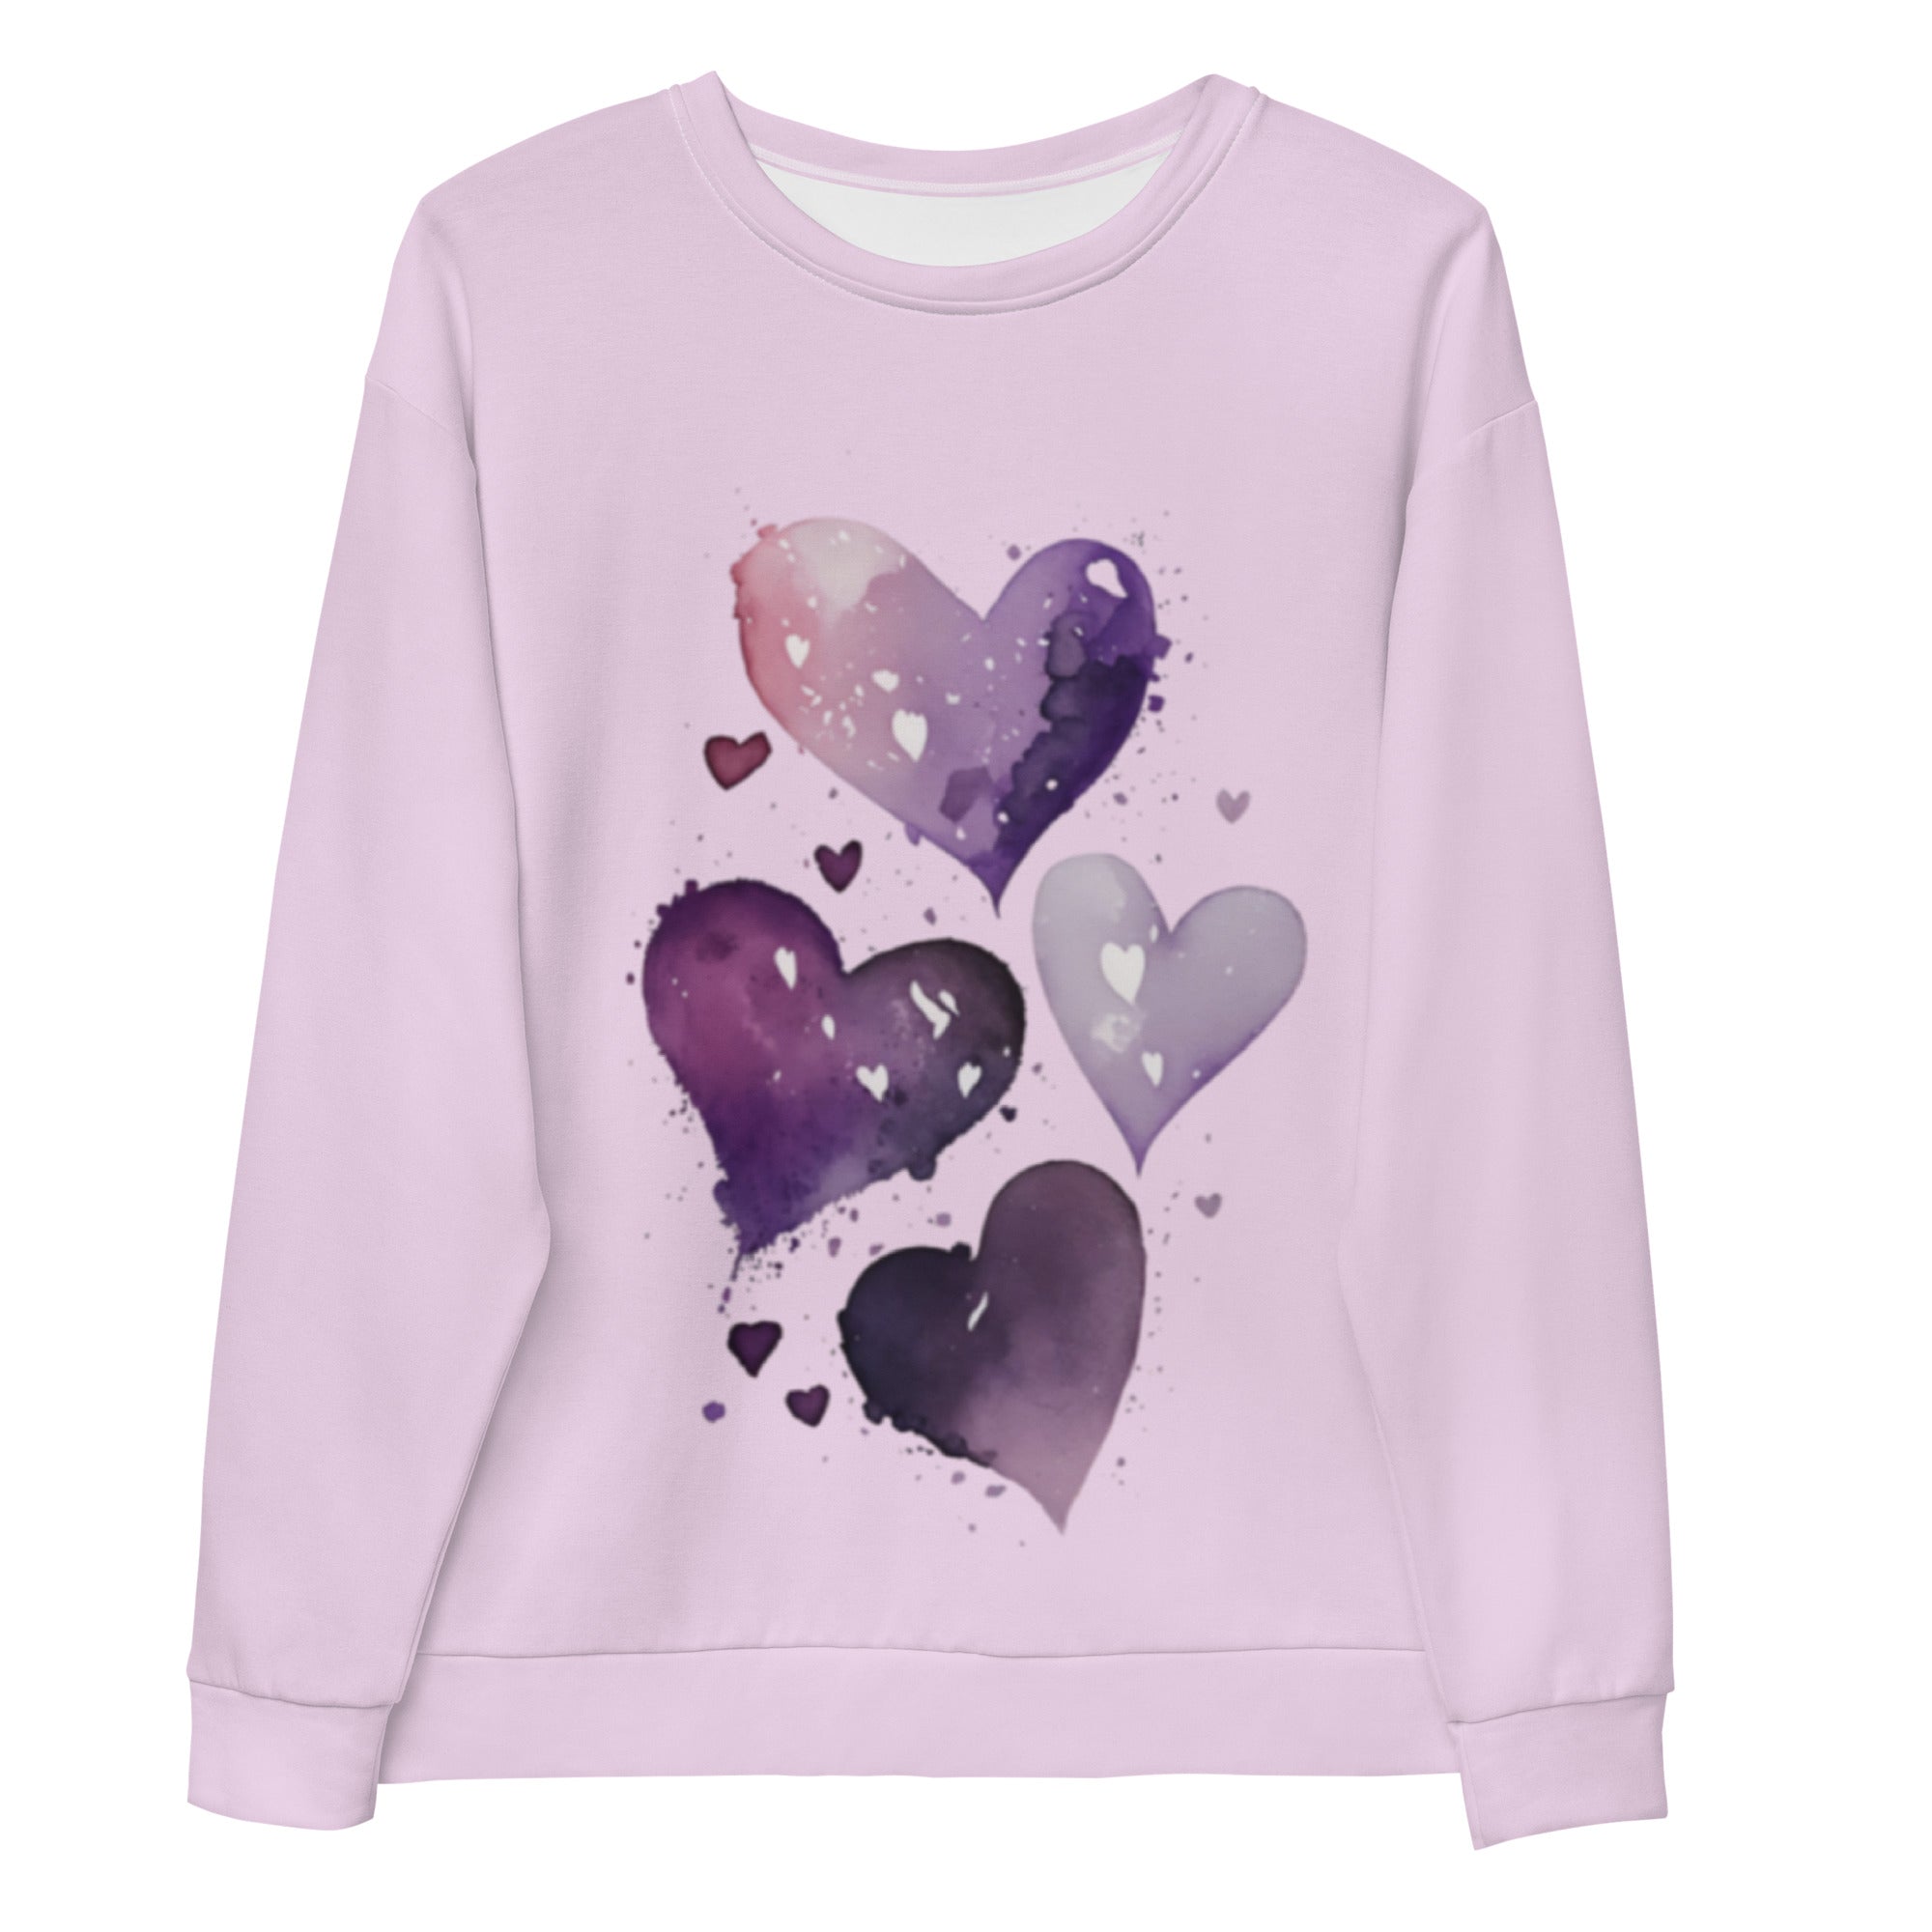 Candy Hearts Women's Sweatshirt